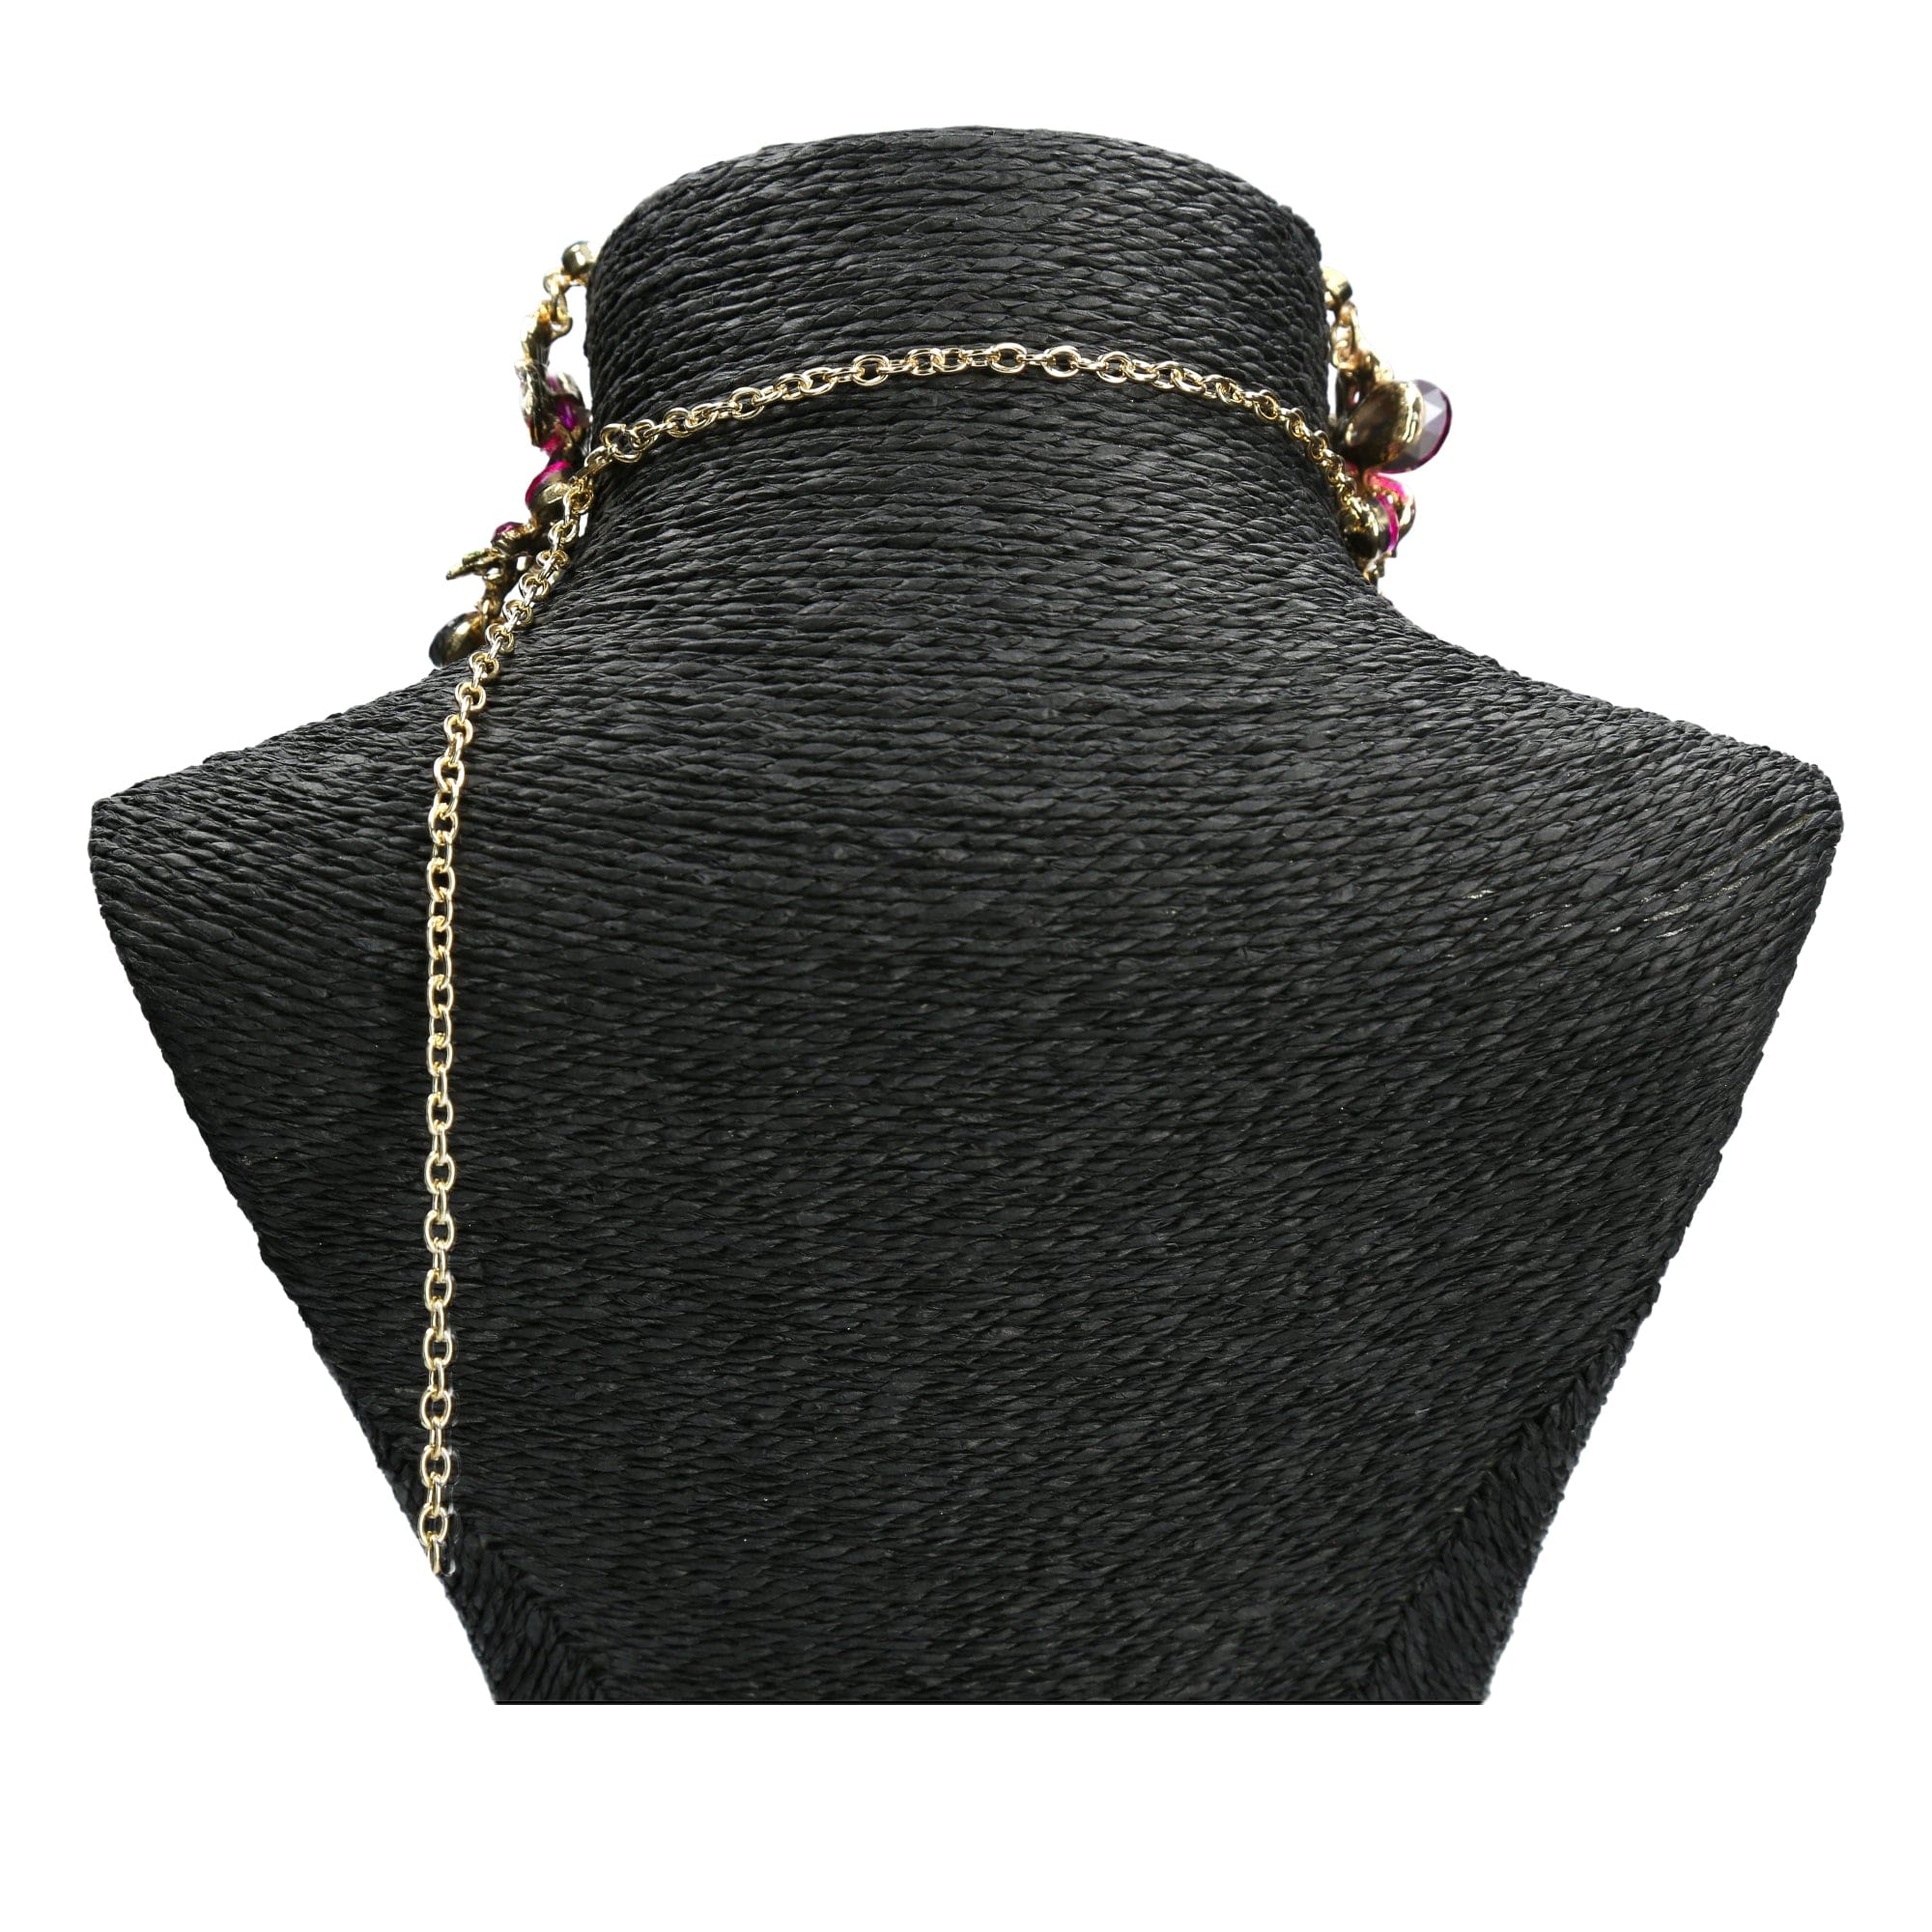 Smyckeset Clovis - Halsband